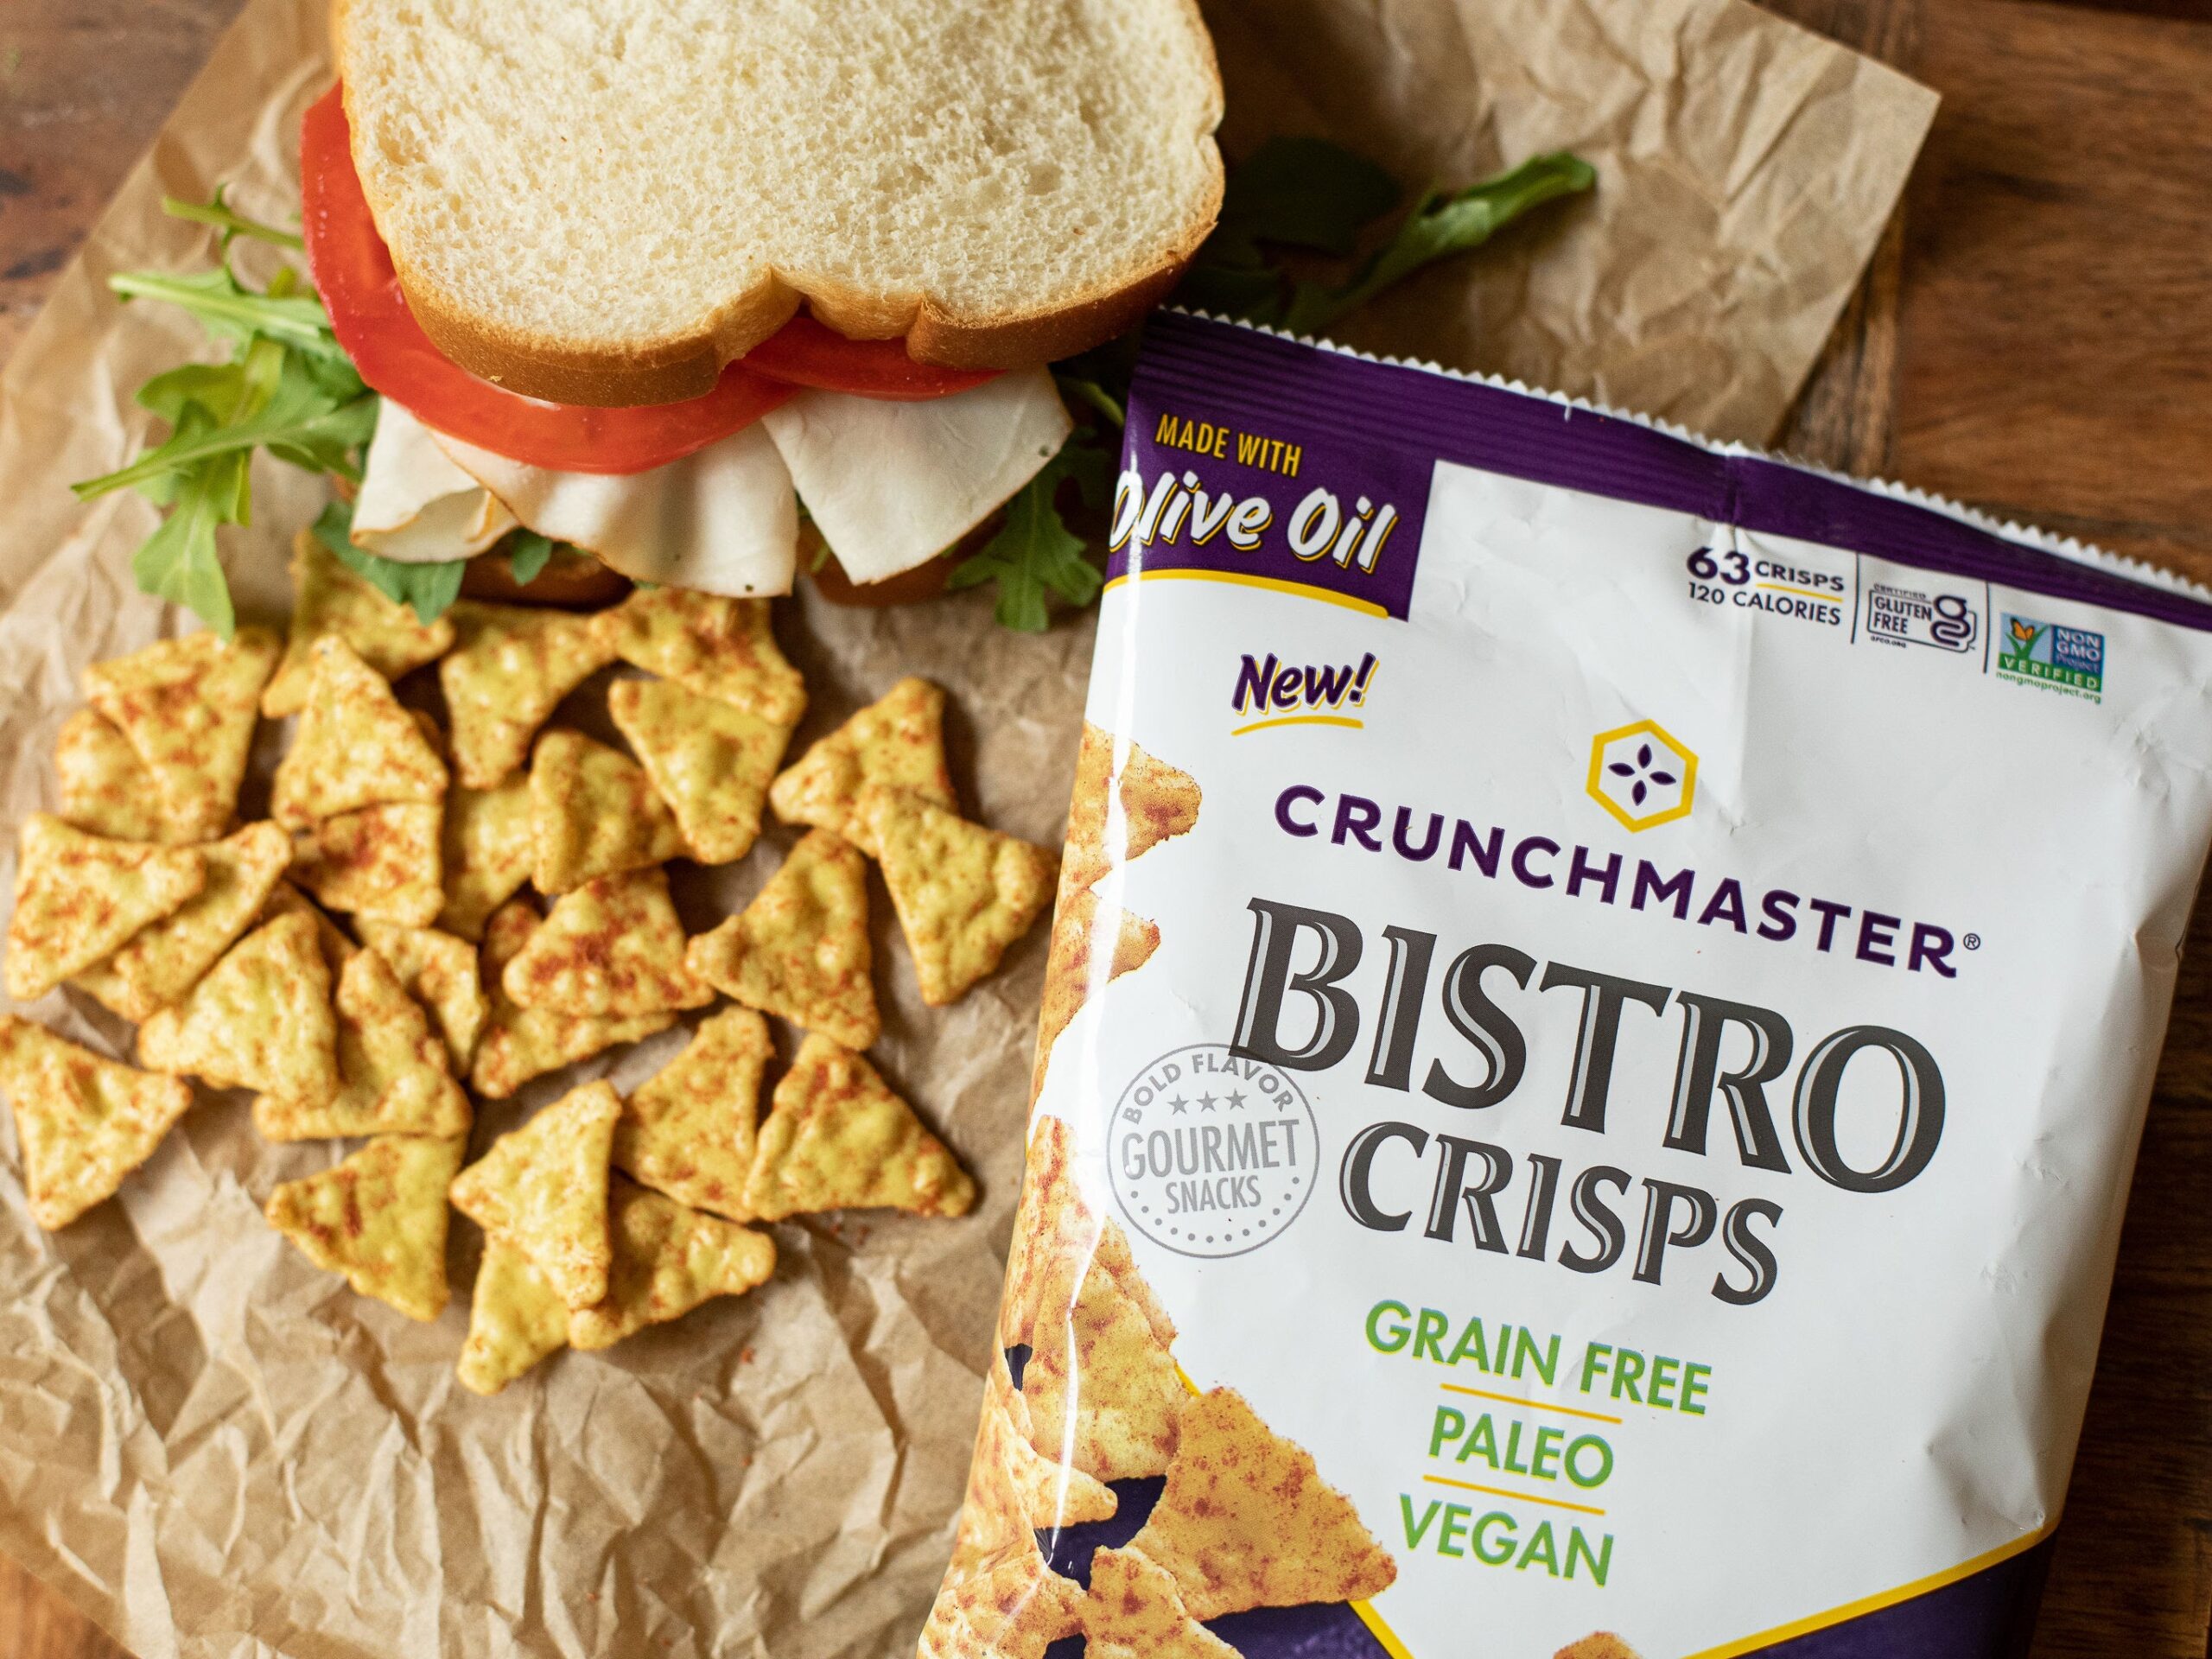 Crunchmaster Bistro Crisps Or Crackers Just $1.49 At Publix